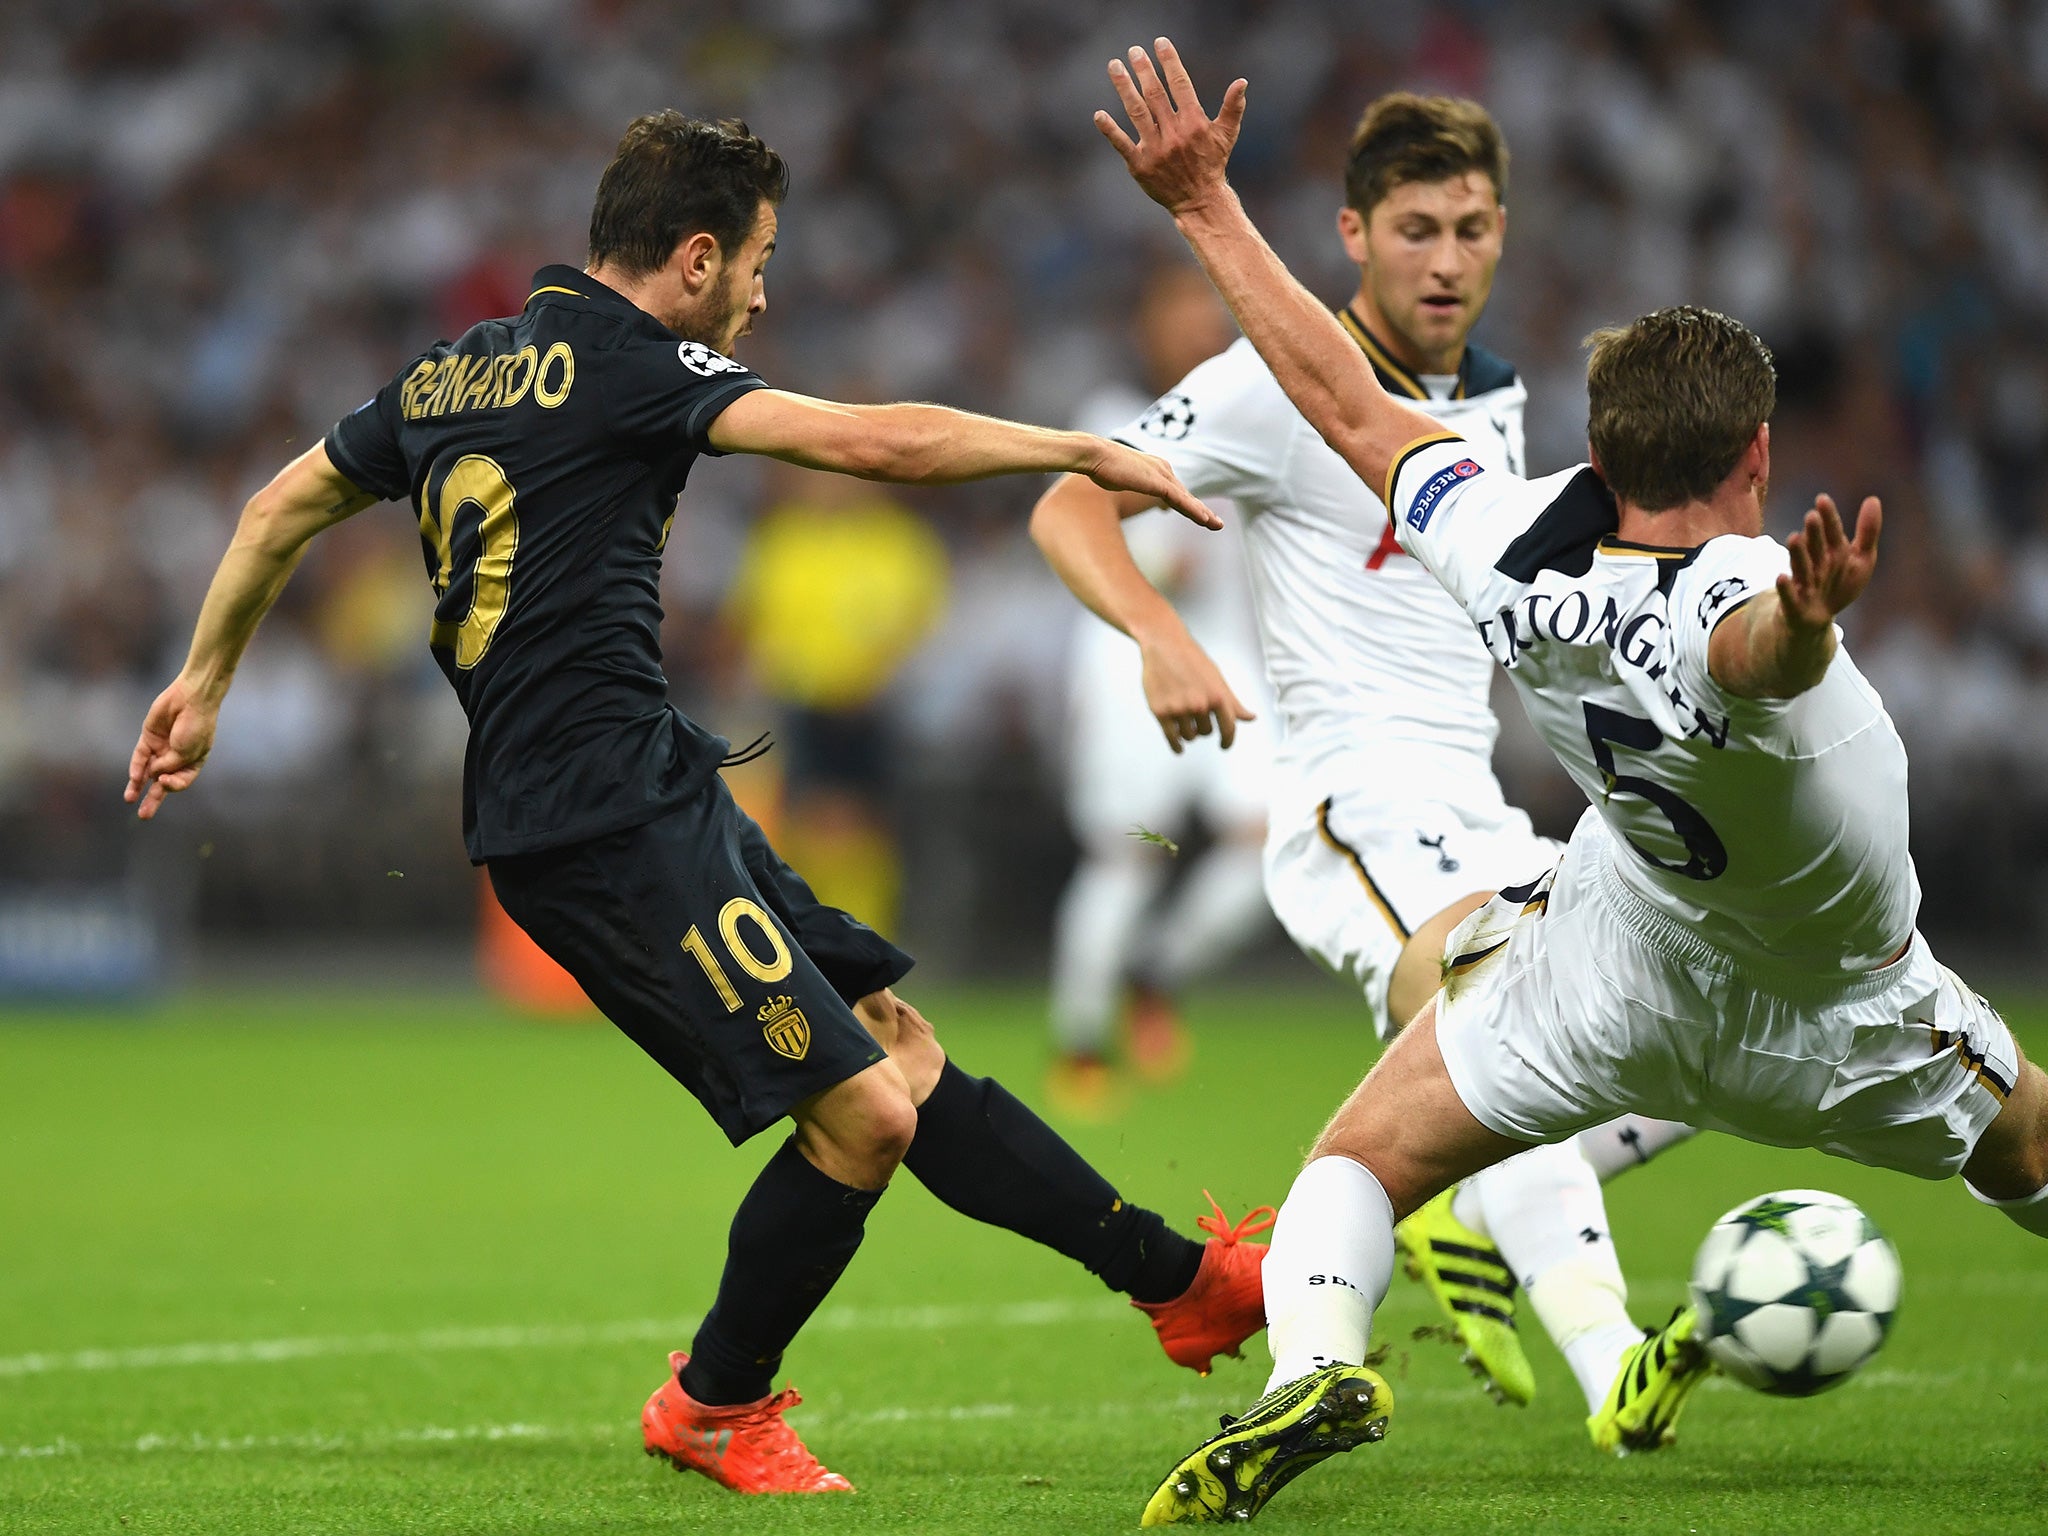 Silva strikes to open the scoring for Monaco at Wembley